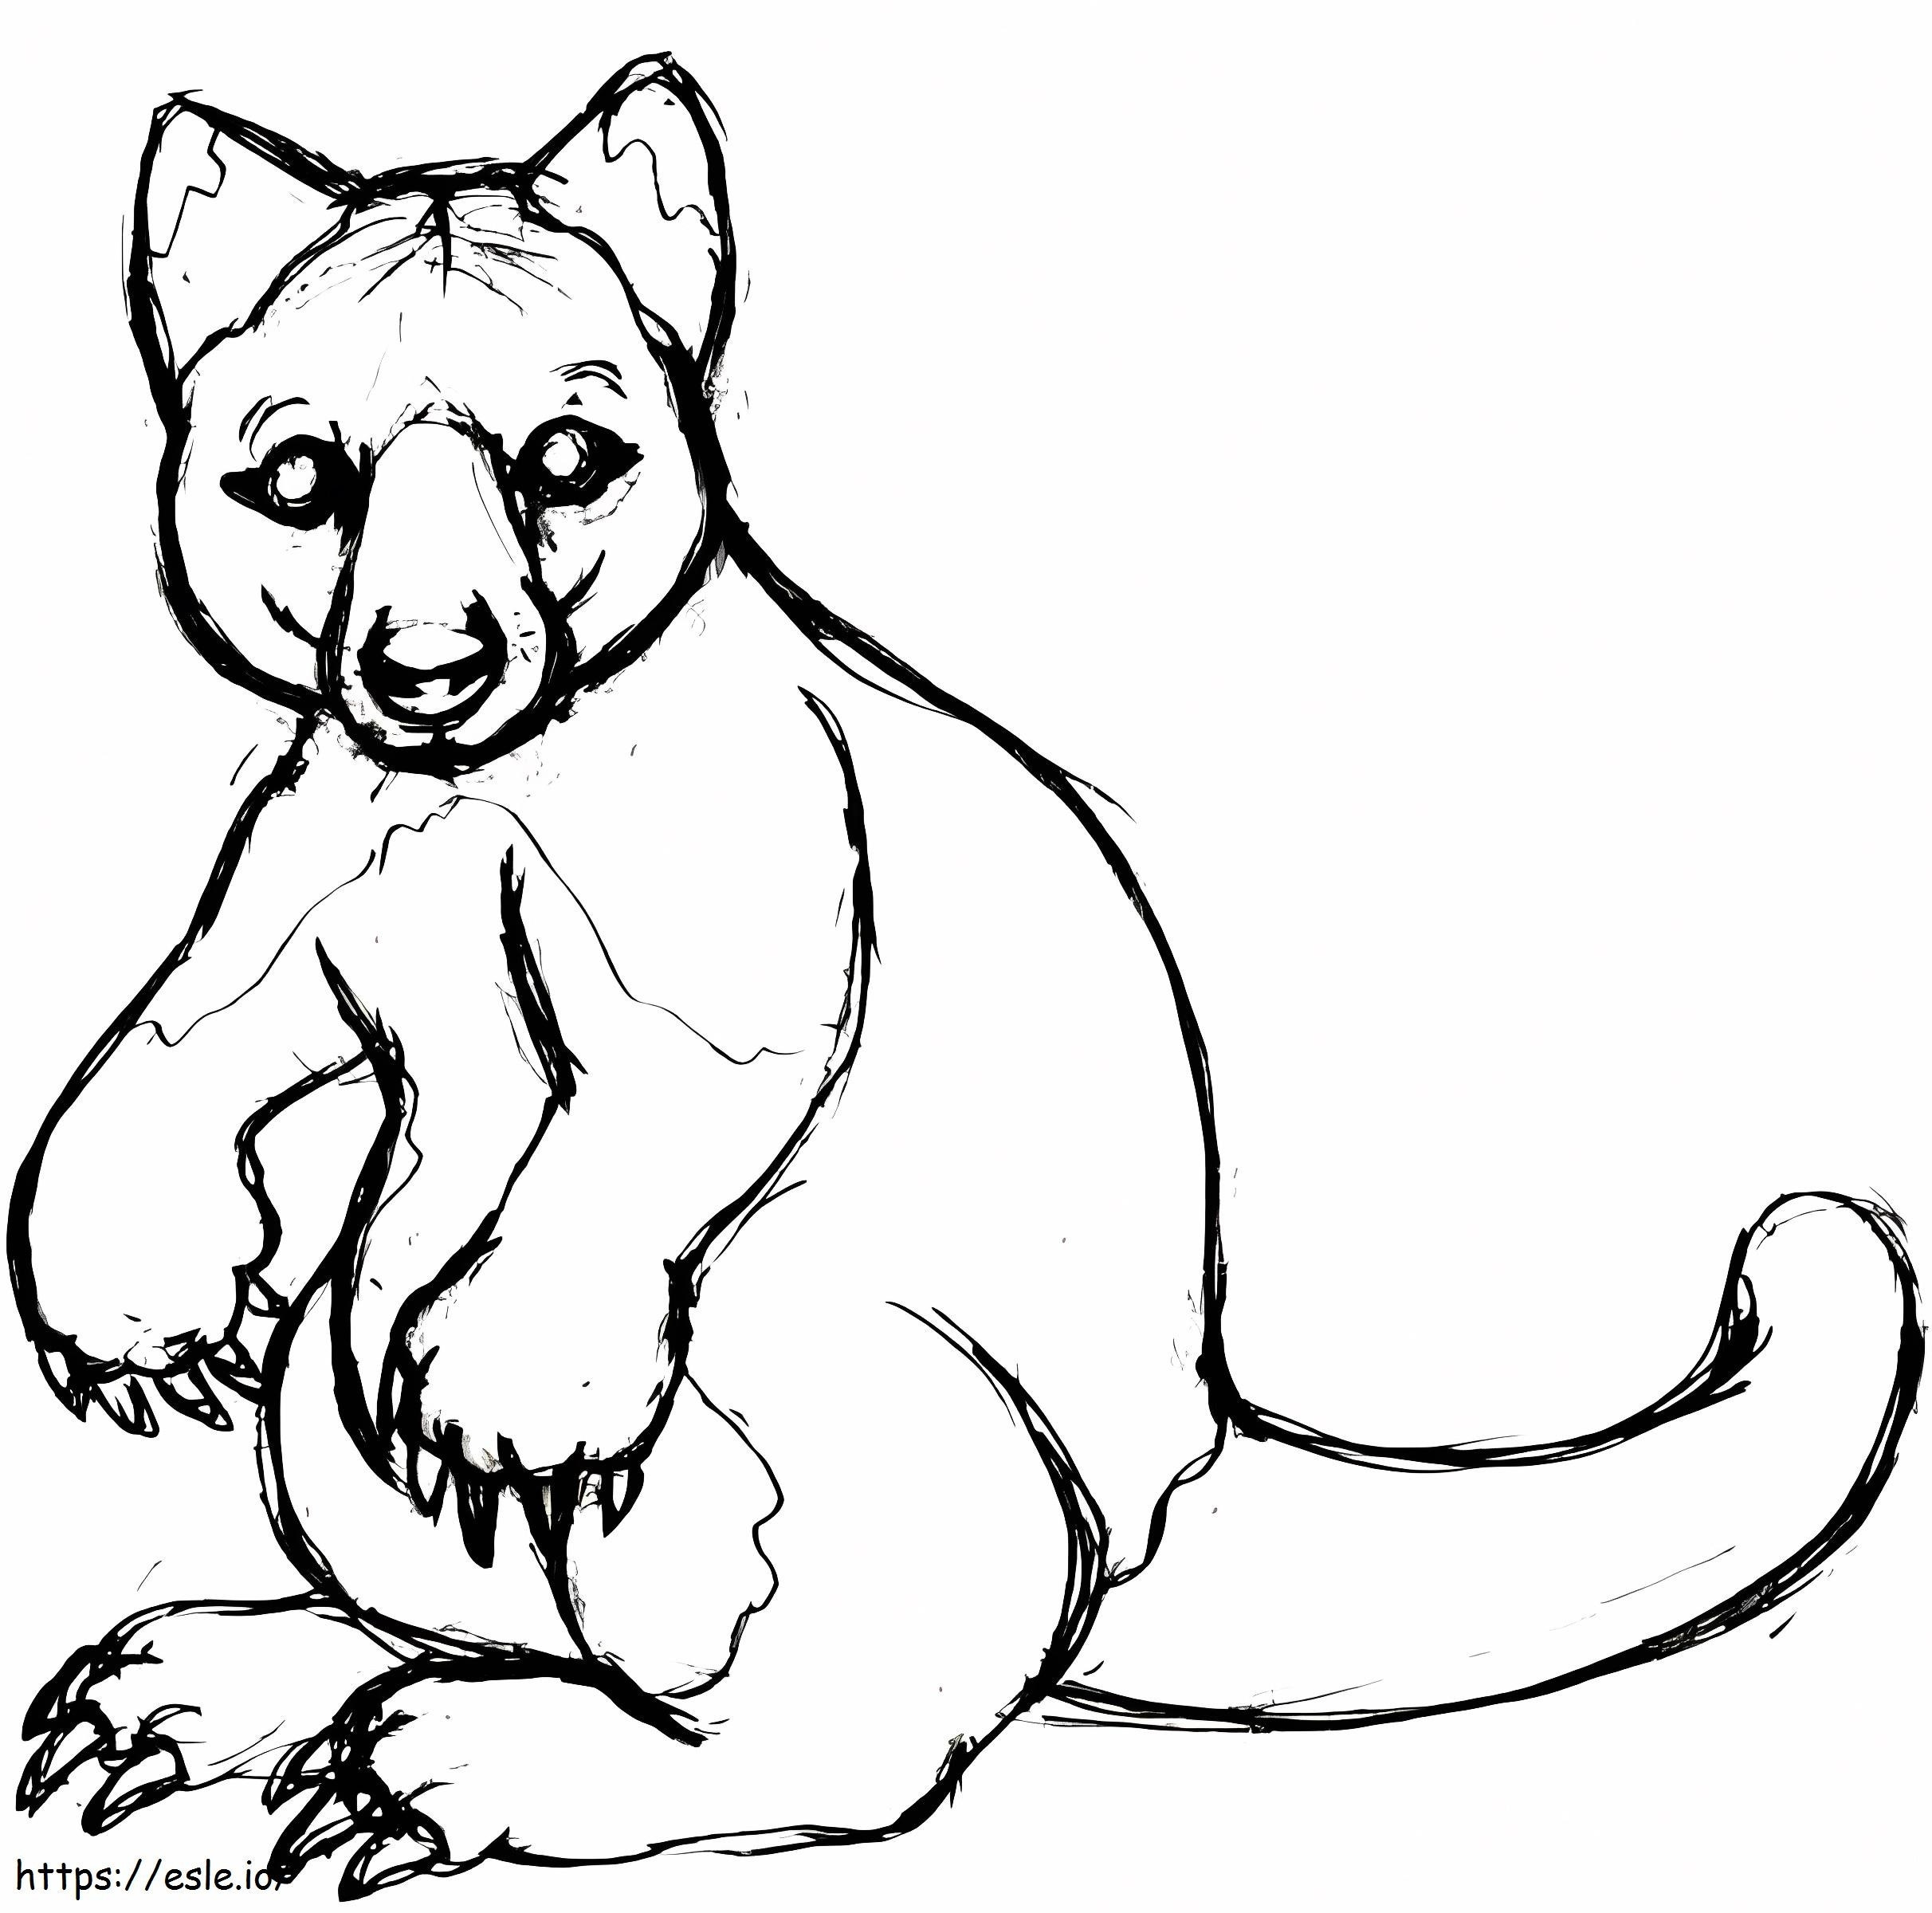 Tree Kangaroo Sketch coloring page